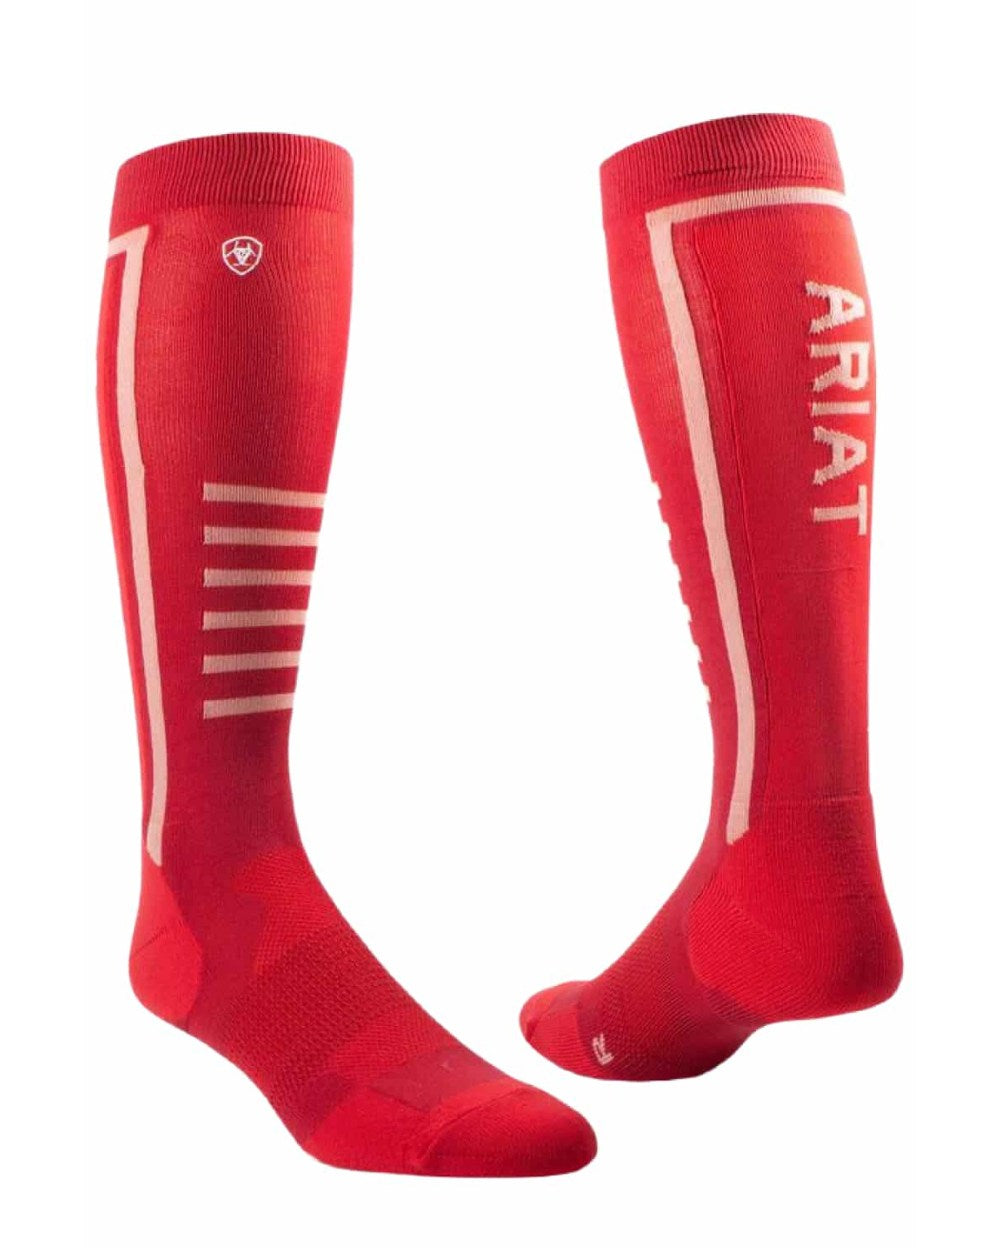 Red Bud/Party Punch Coloured AriatTEK Slimline Performance Socks On A White Background 